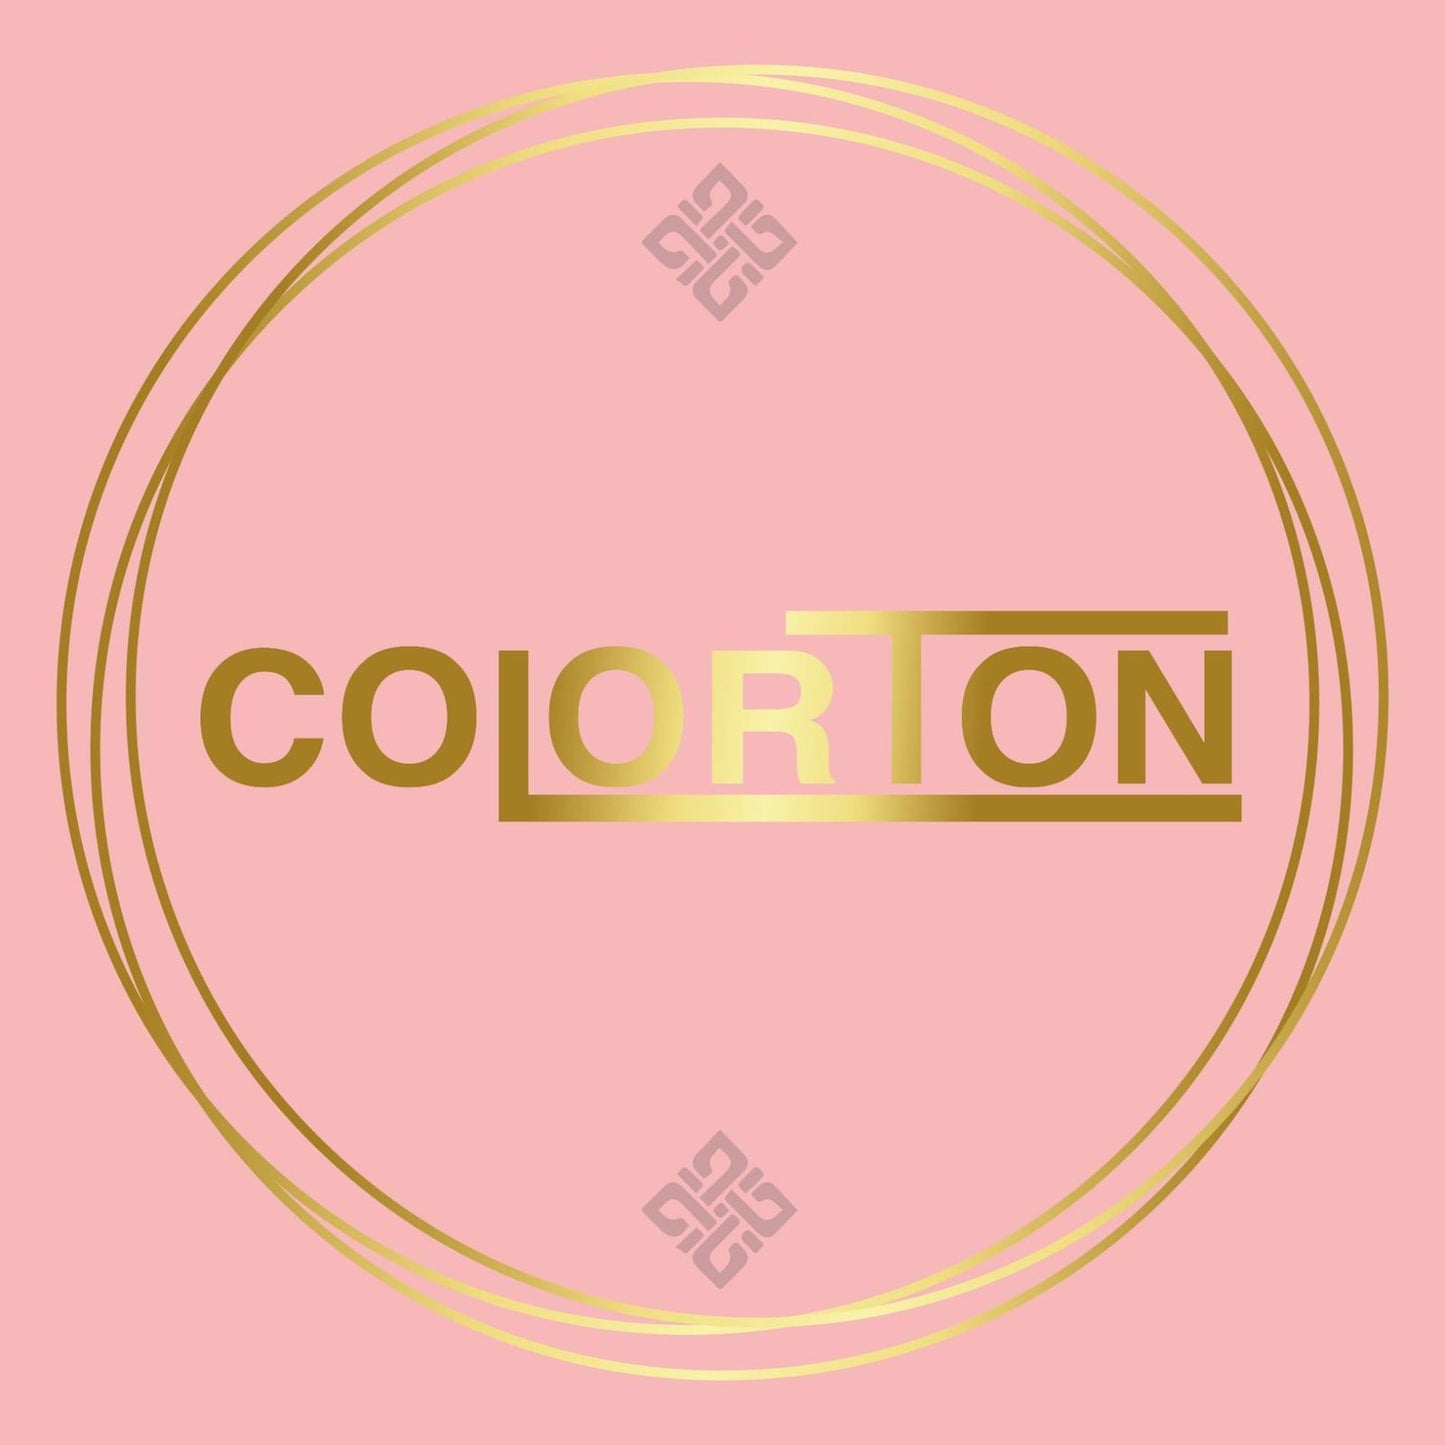 The cocktail colorton 60322